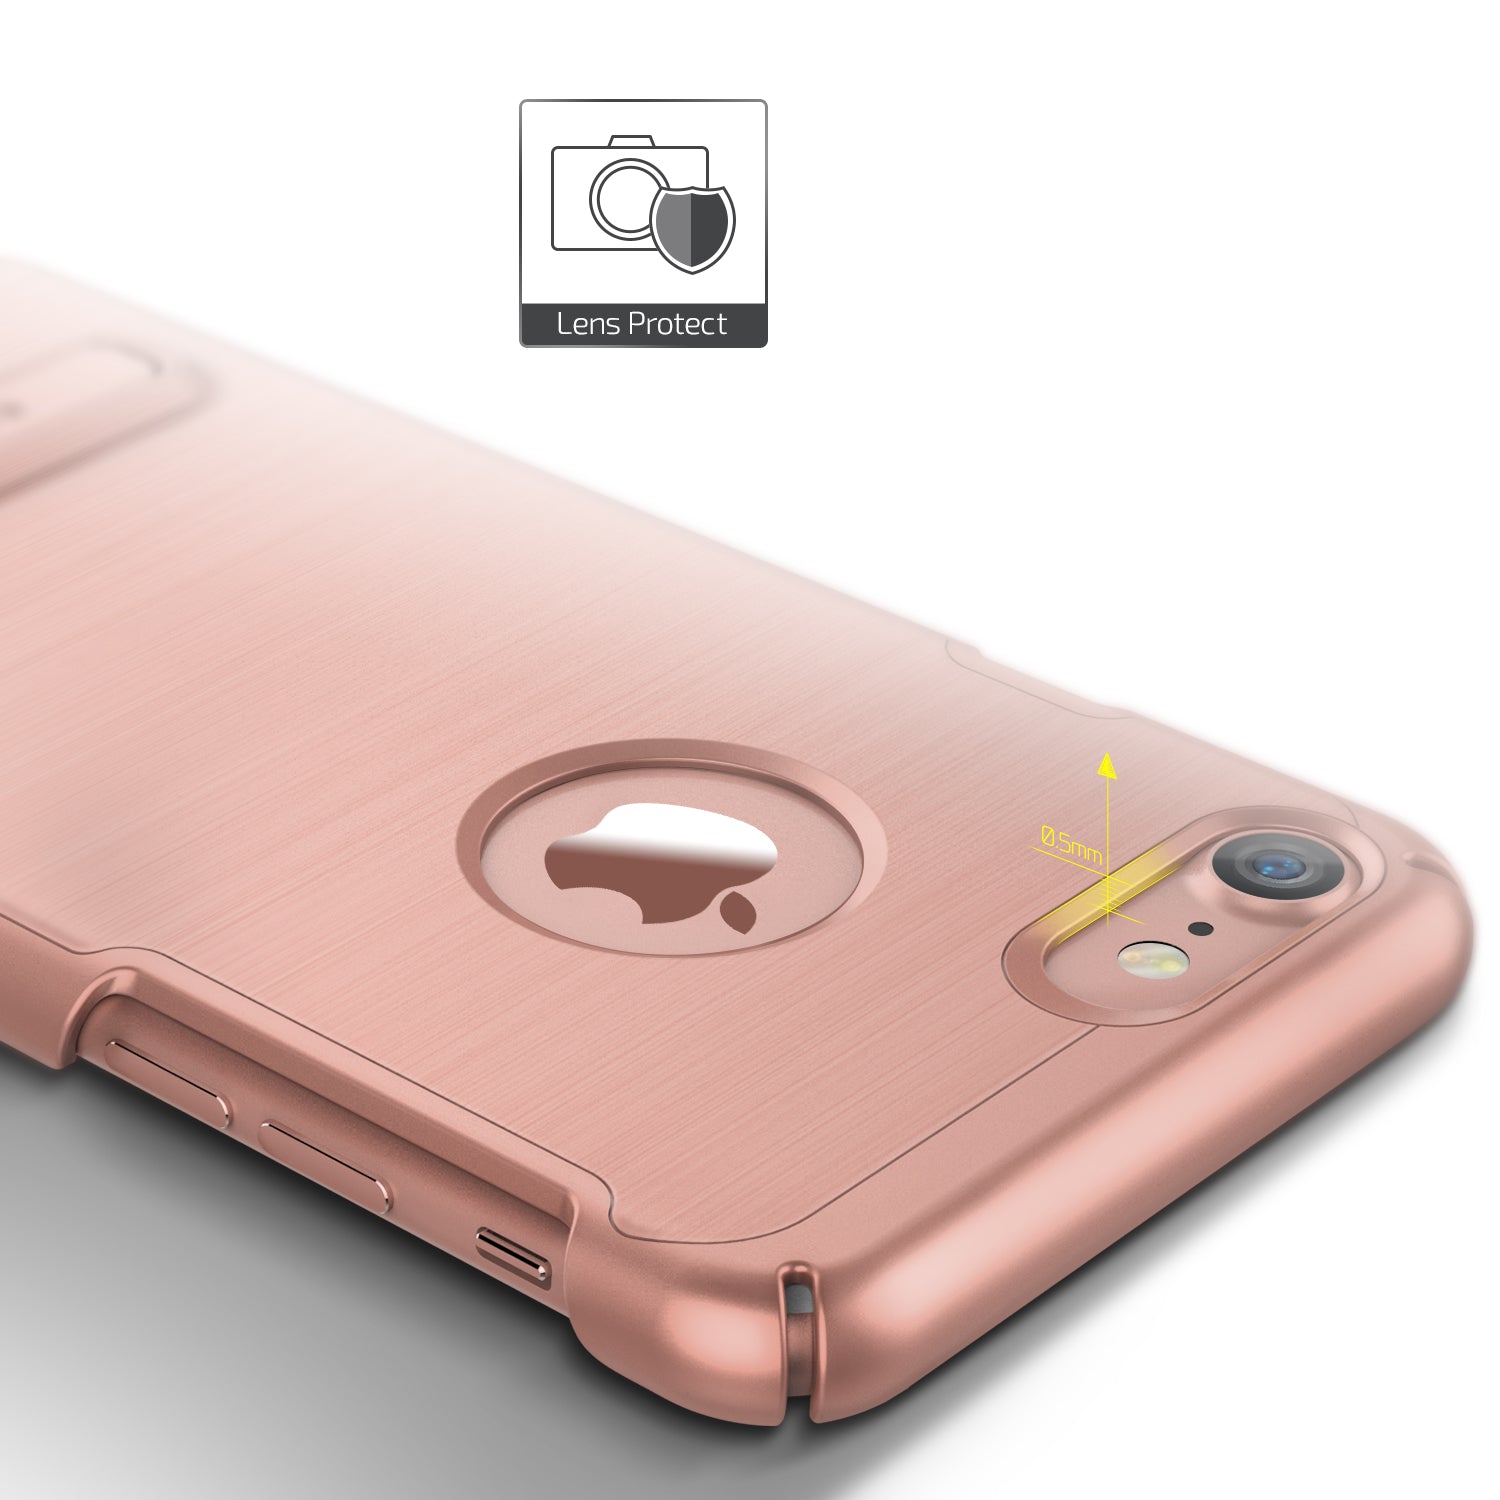 Simpli Lite Series Original From VRS Design Slim Case For iPhone 7 Rose Gold